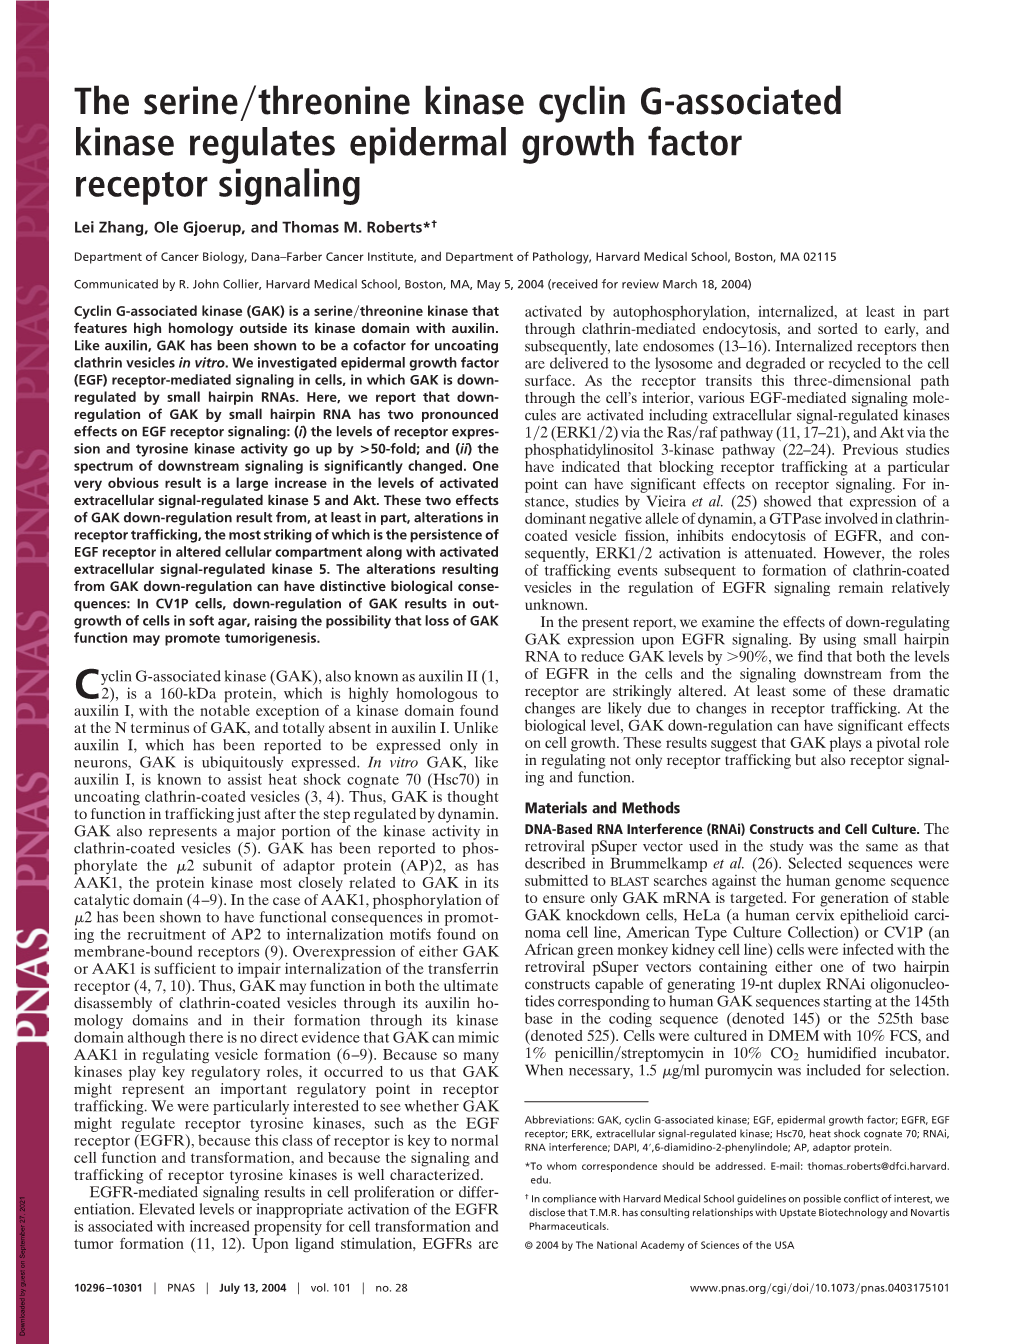 The Serine Threonine Kinase Cyclin G-Associated Kinase Regulates